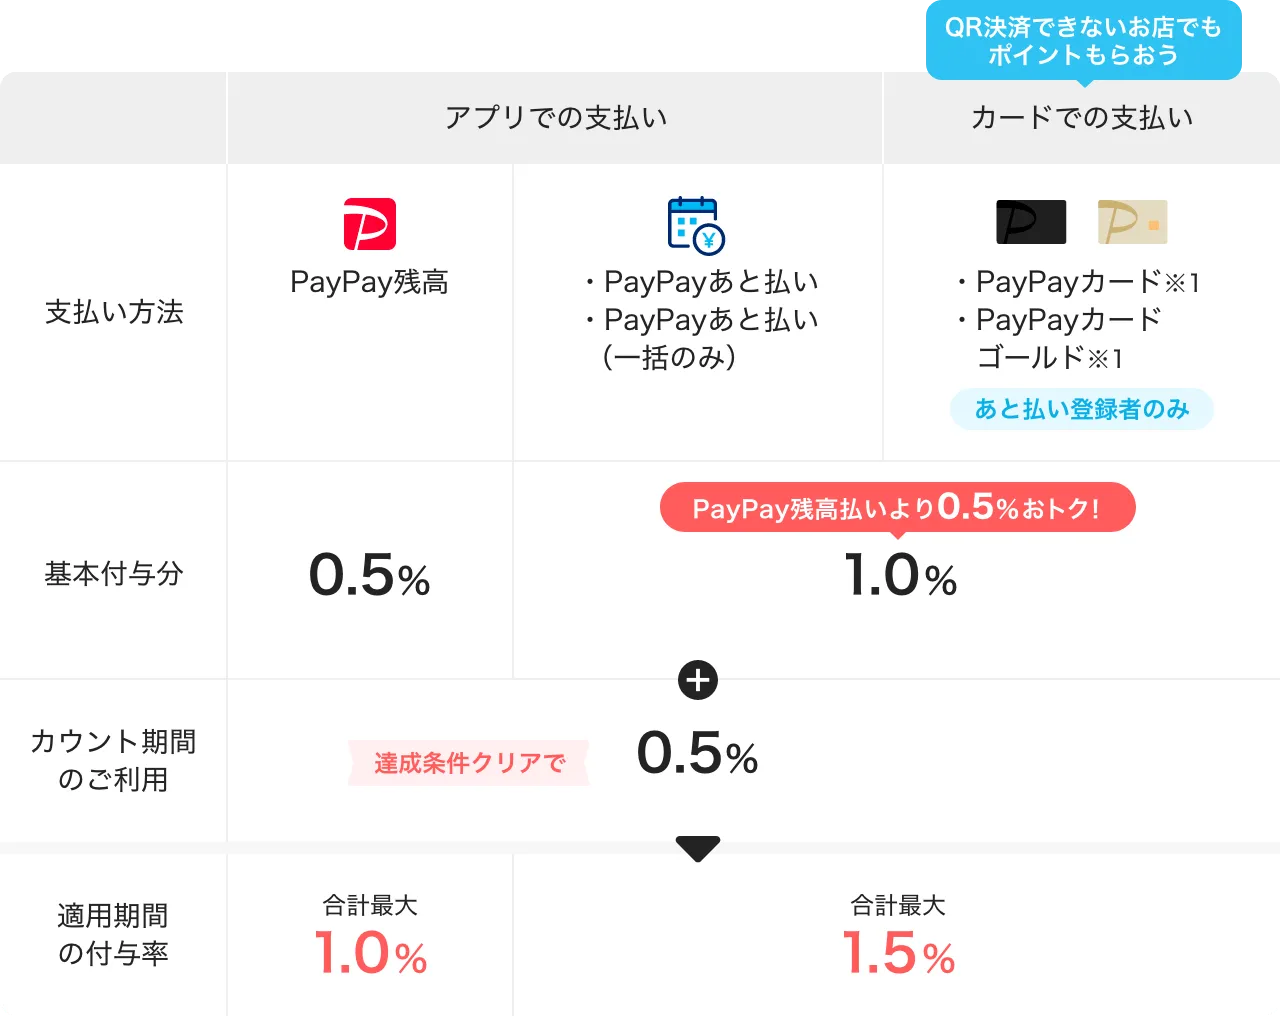 【PayPayカード限定】paypay(ペイペイ)「最大1.5%ポイント還元」キャンペーン